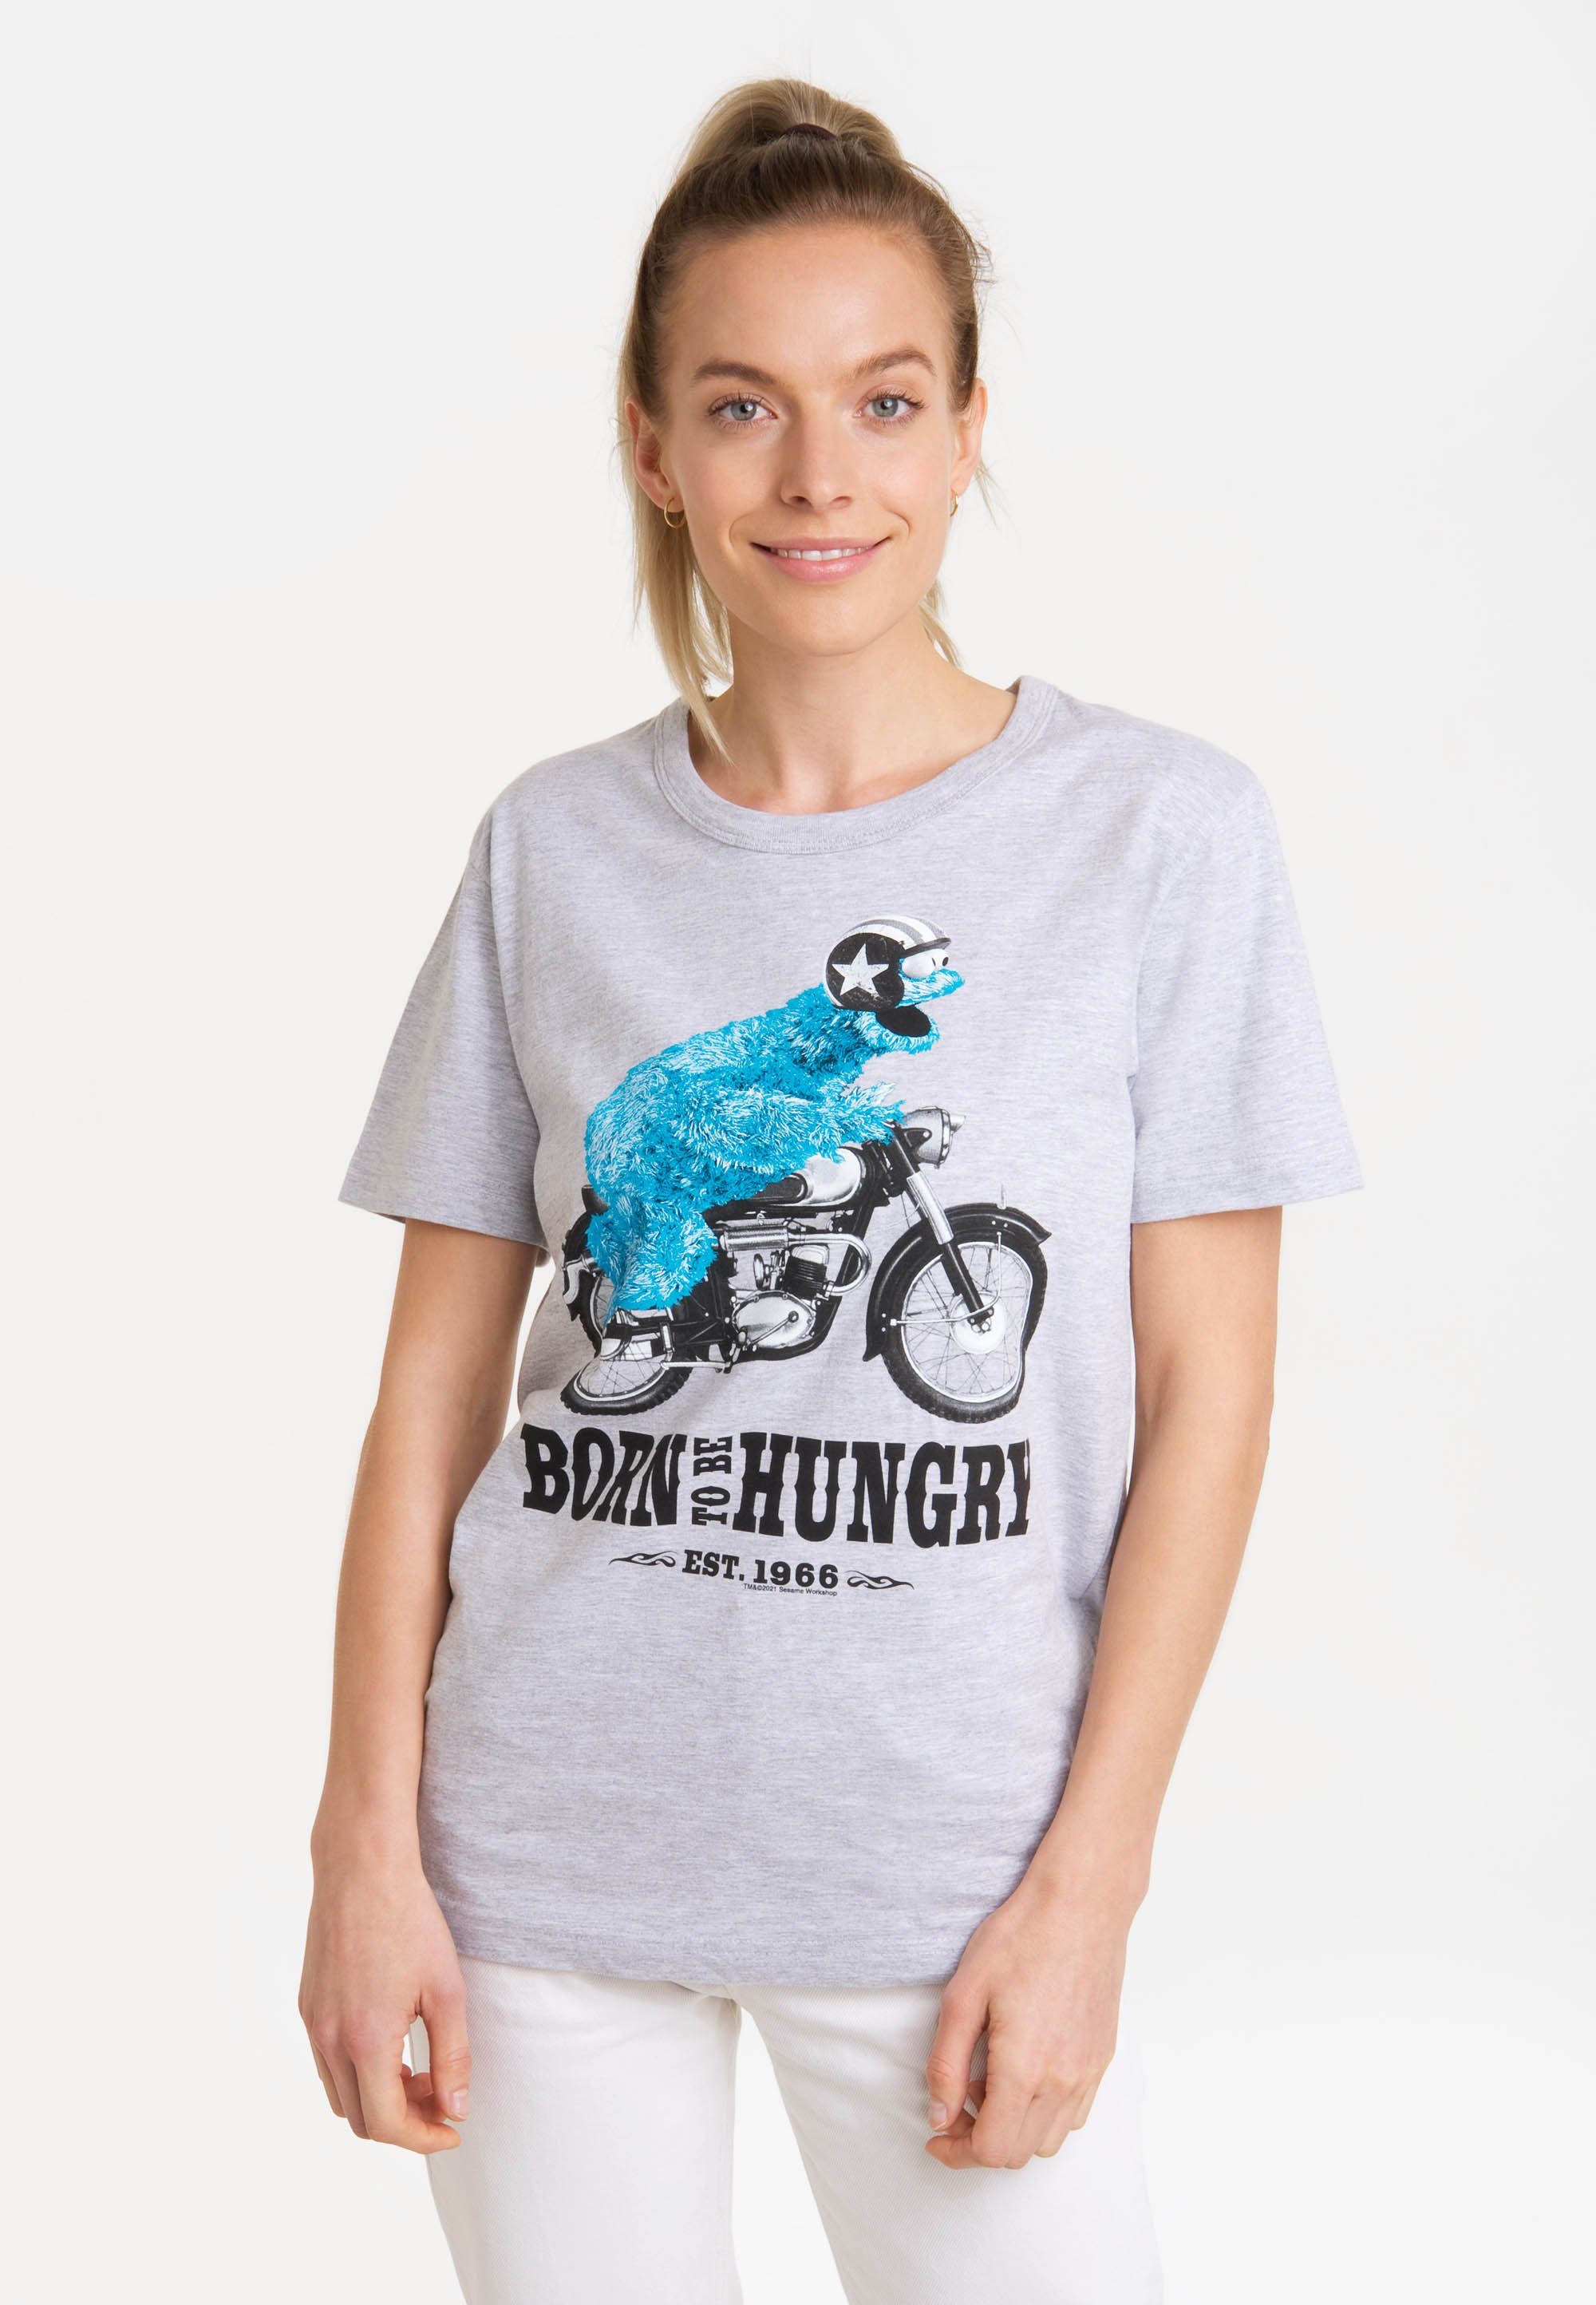 LOGOSHIRT T-Shirt Sesamstrasse - Print, Highlight der Krümelmonster Krümelmonster-Print als auf Motorrad Front Mit lizenziertem großen mit